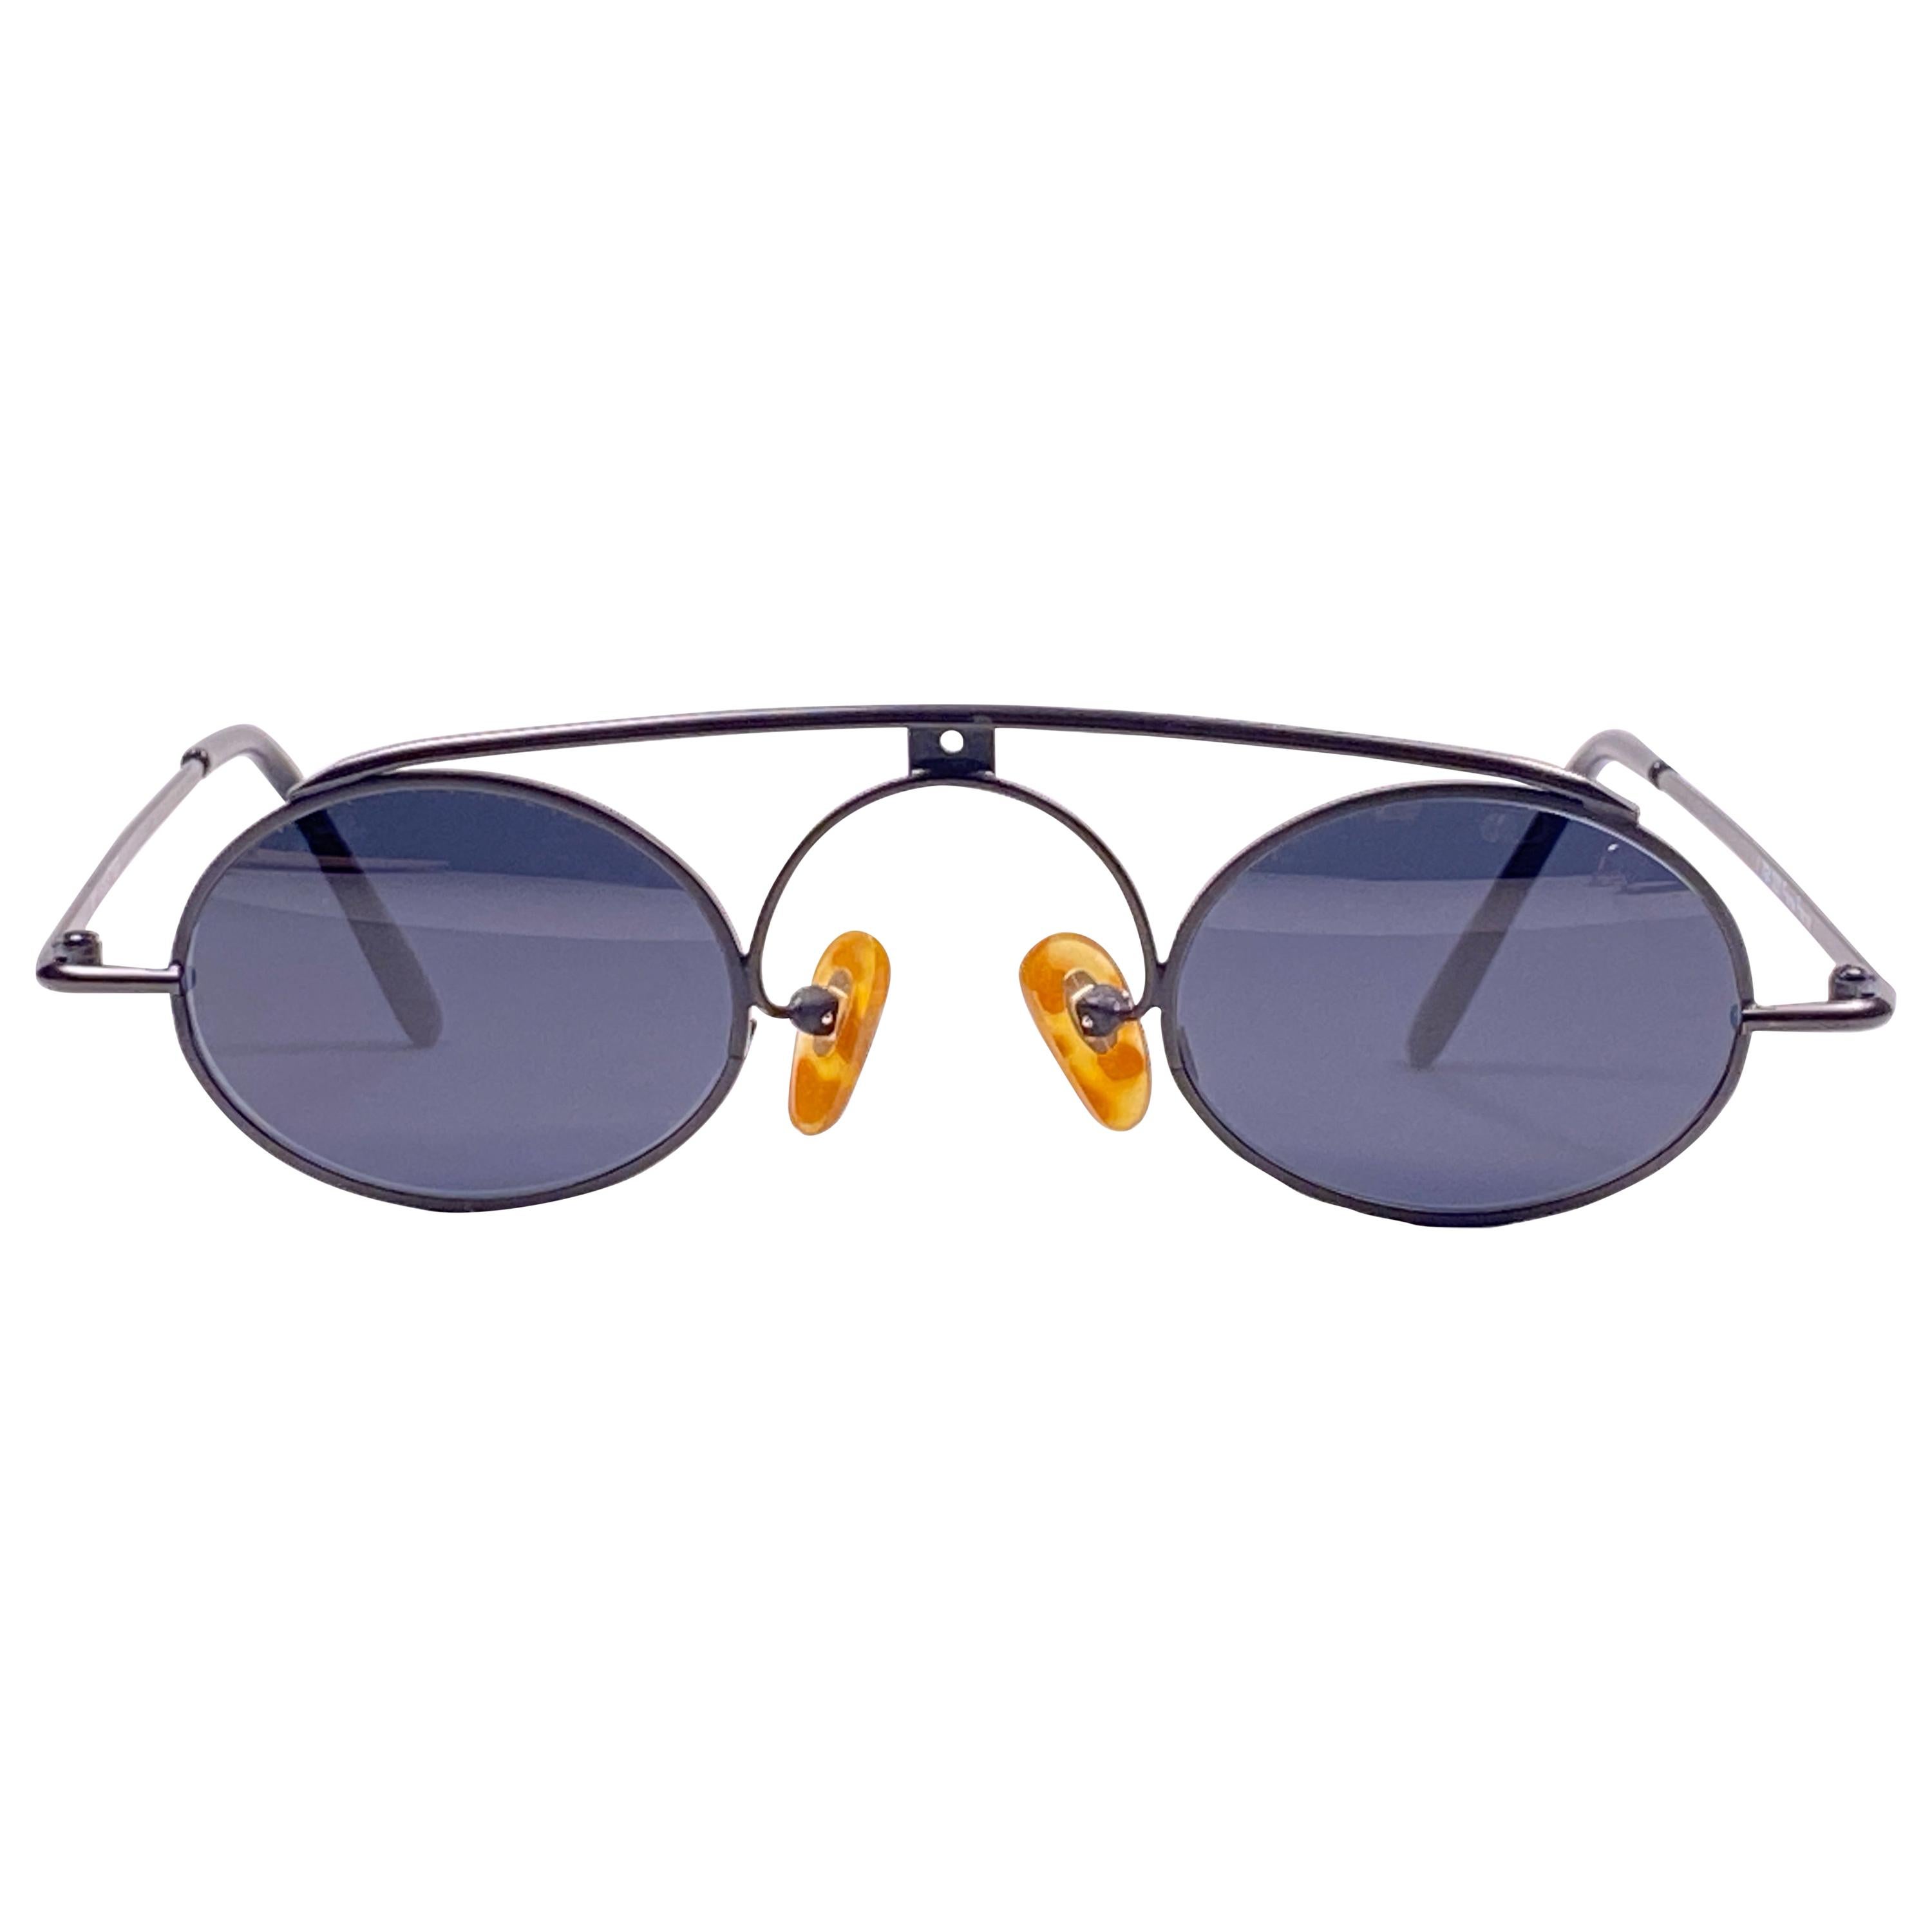 Vintage IDC Lunettes Black Matte Grey Lens Small 1980's Sunglasses France For Sale